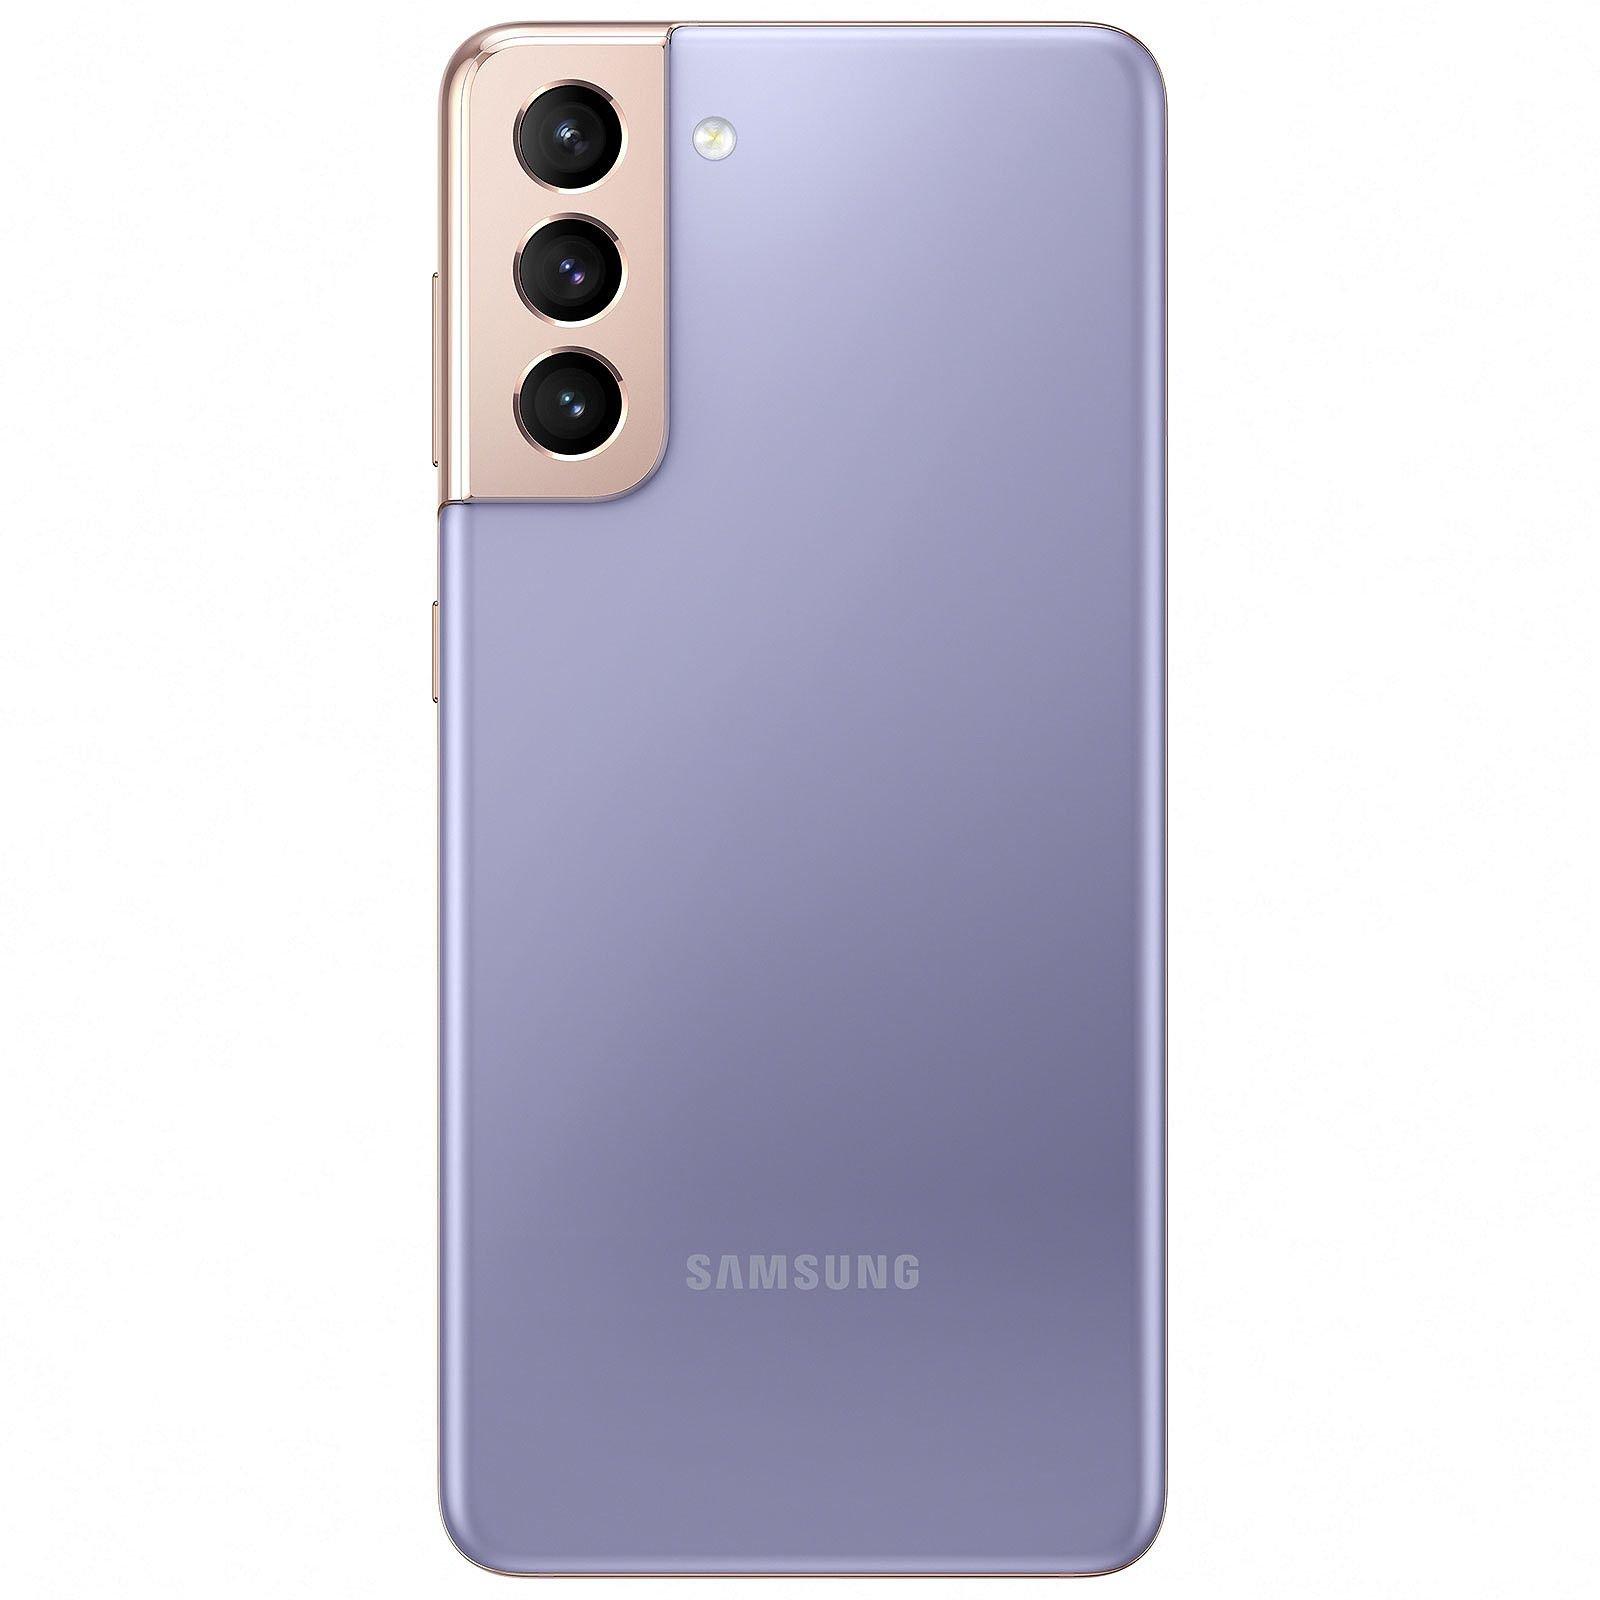 SAMSUNG  Reconditionné Galaxy S21 5G (dual sim) 128 Go - Très bon état 